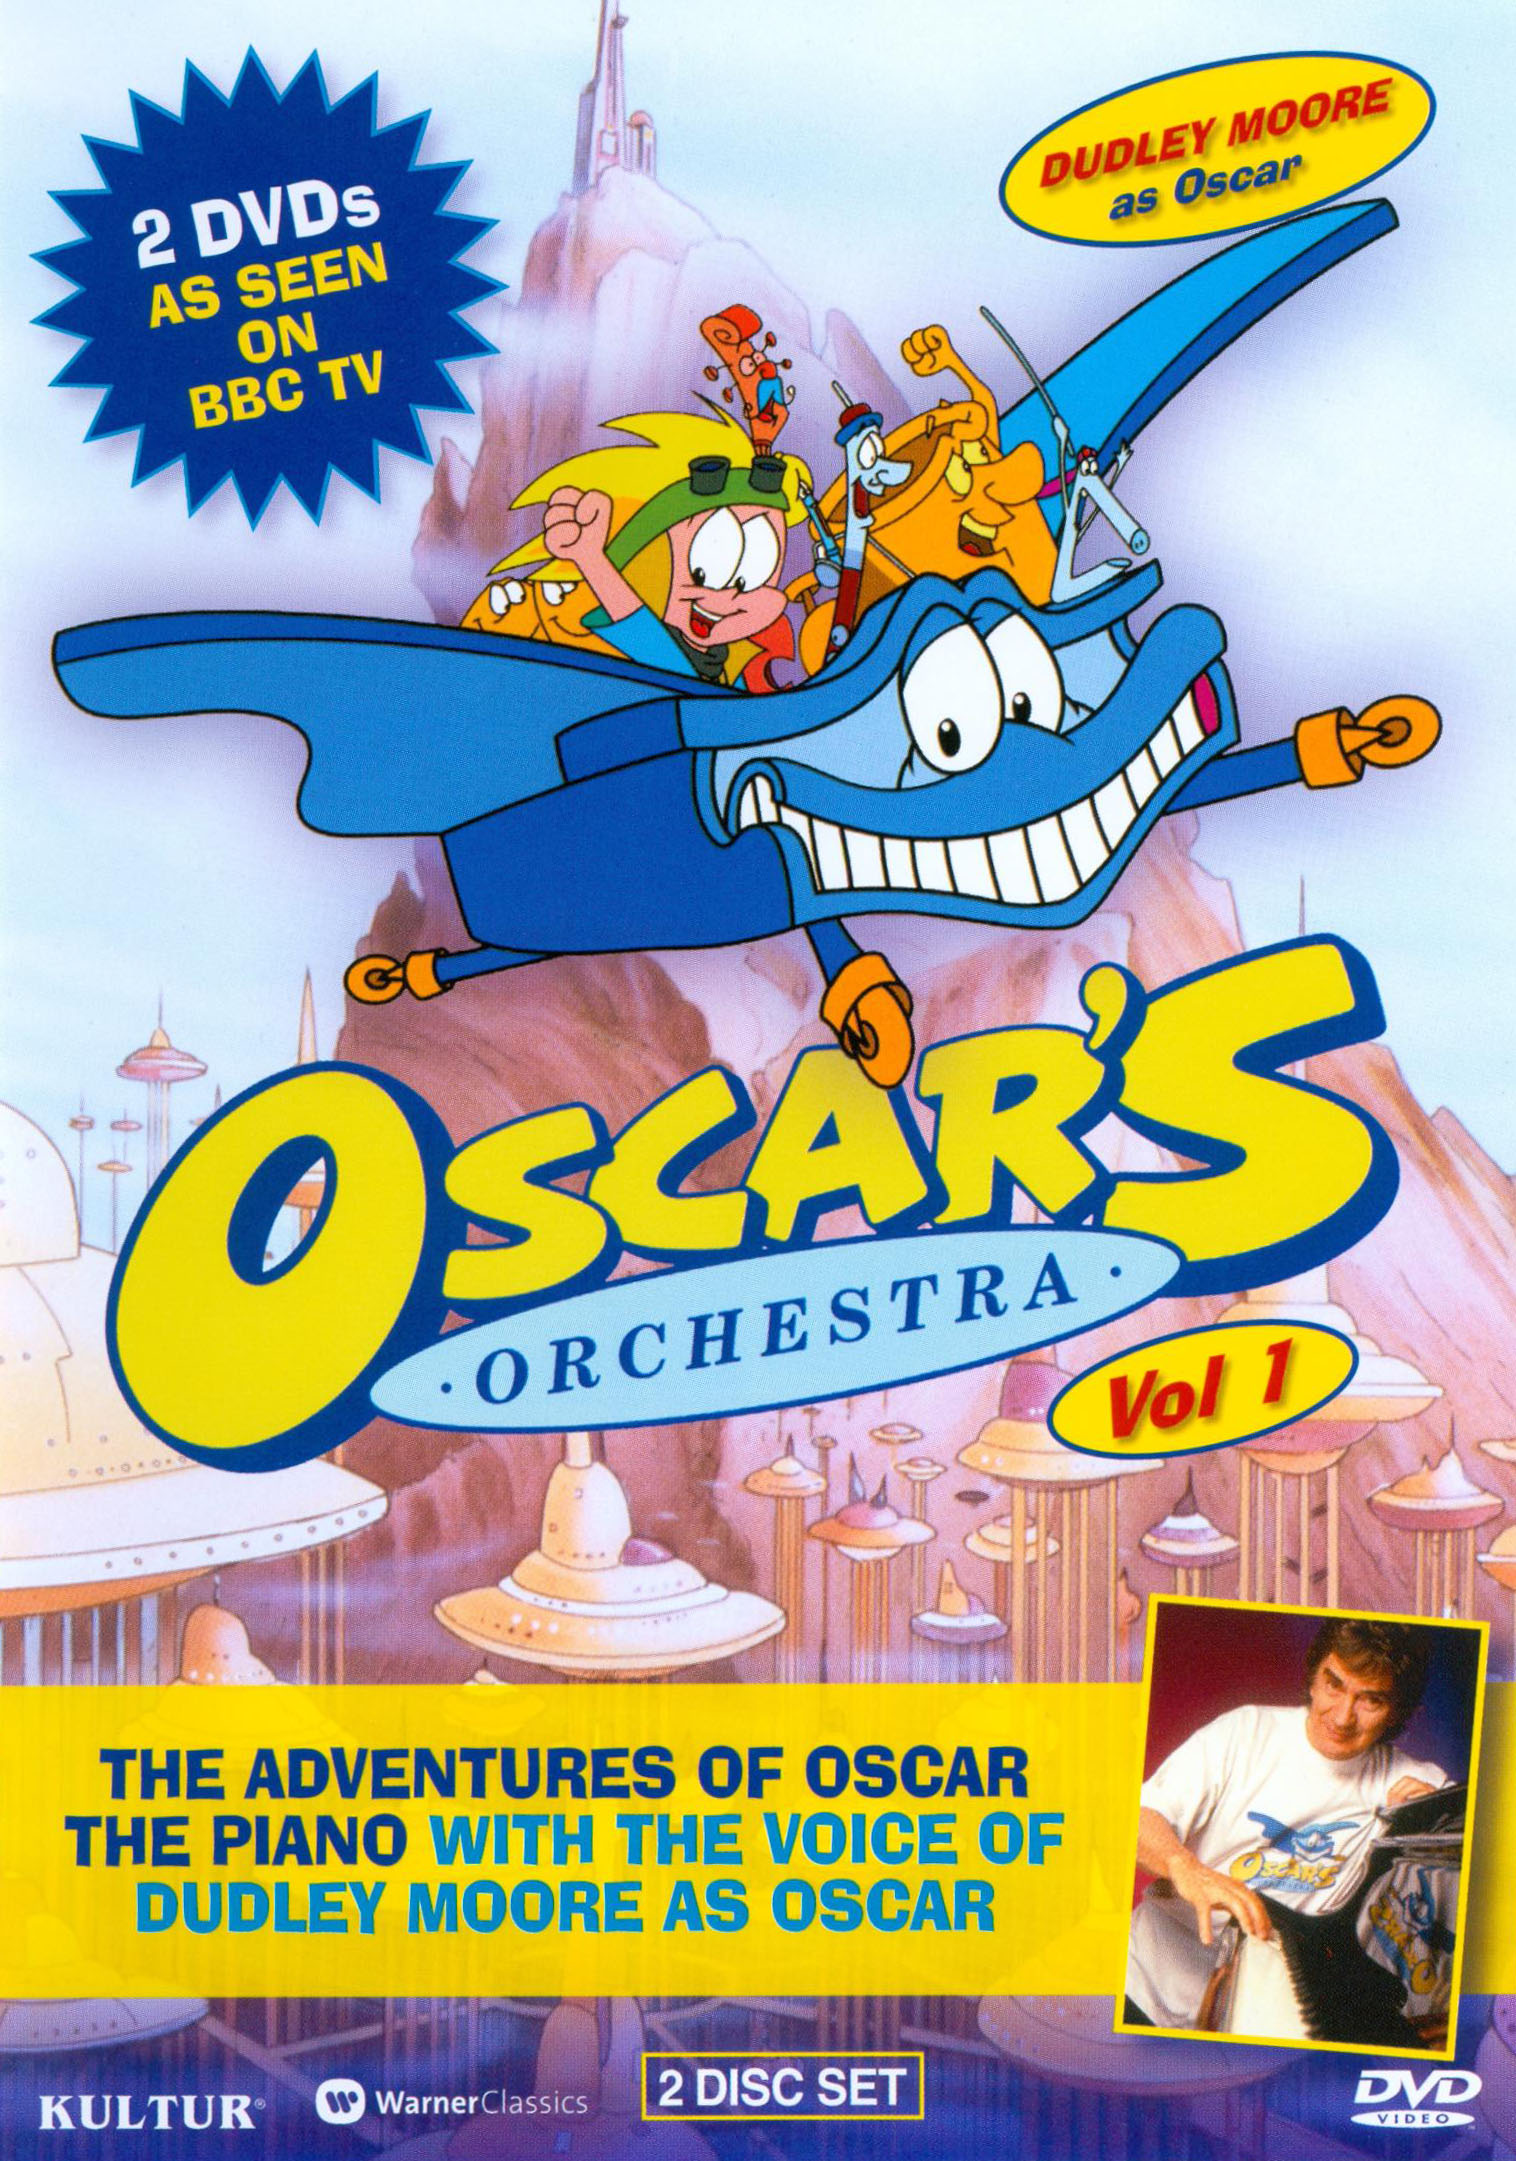 Oscars Oasis 2 - DVD - English -: : Movies & TV Shows